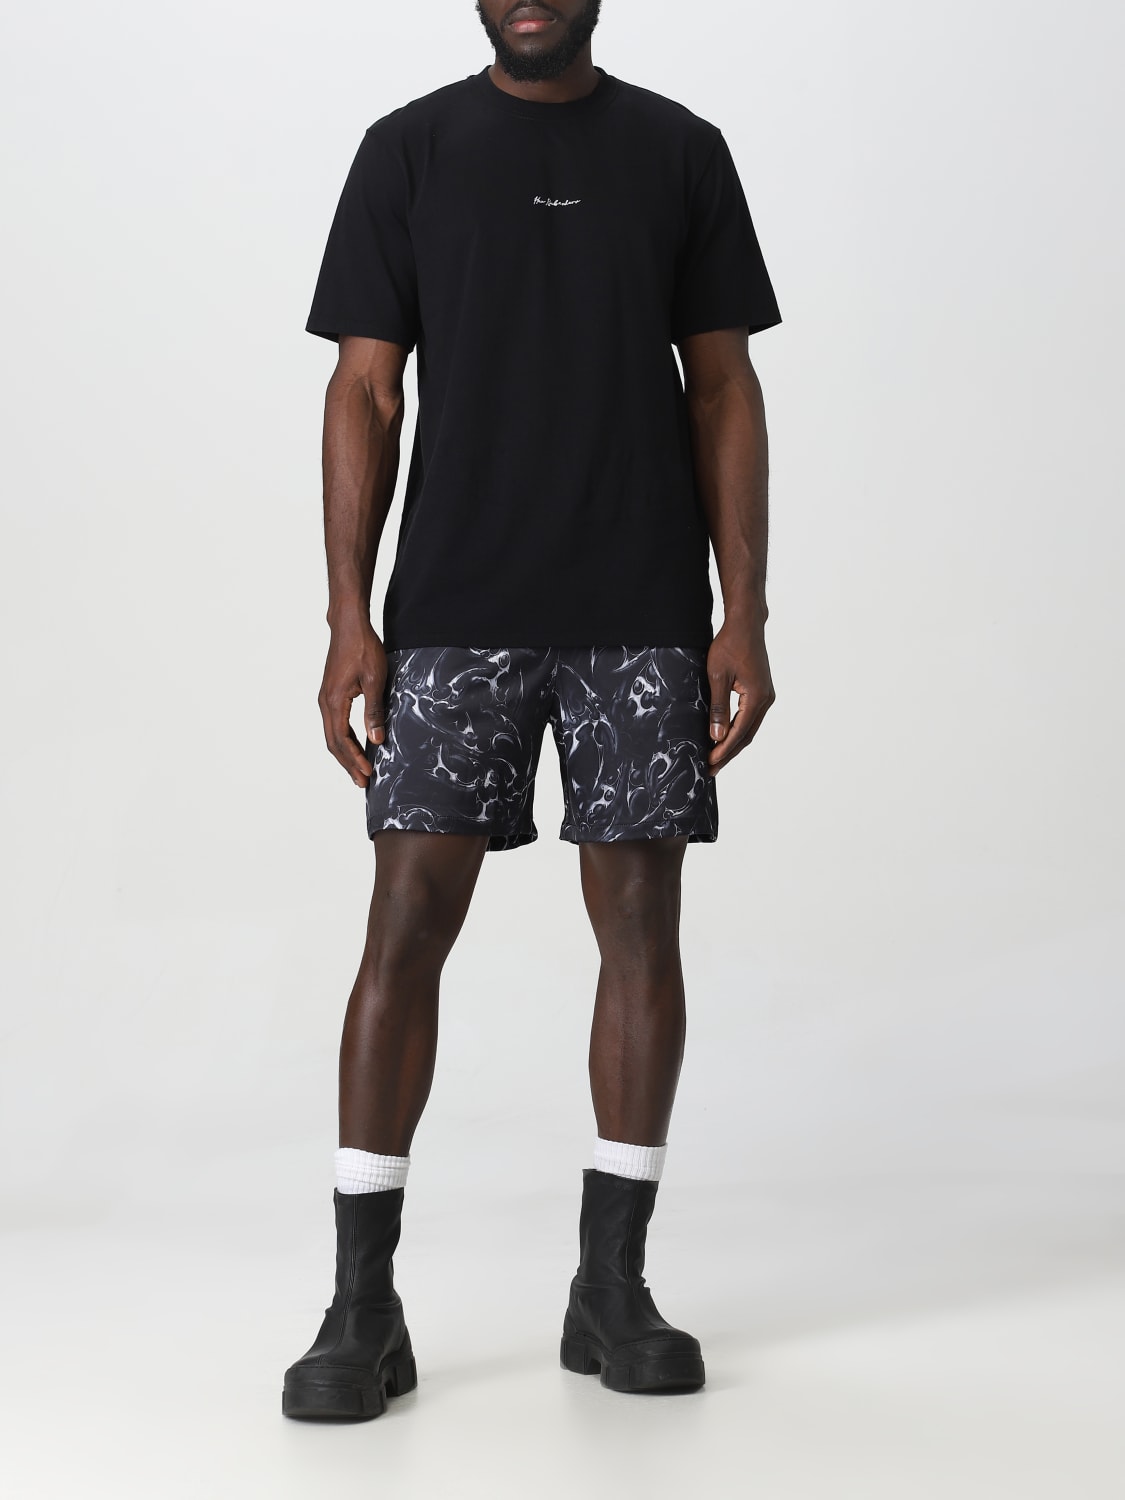 HAN t-shirt man - Black | Kjøbenhavn t-shirt M132073 online on GIGLIO.COM